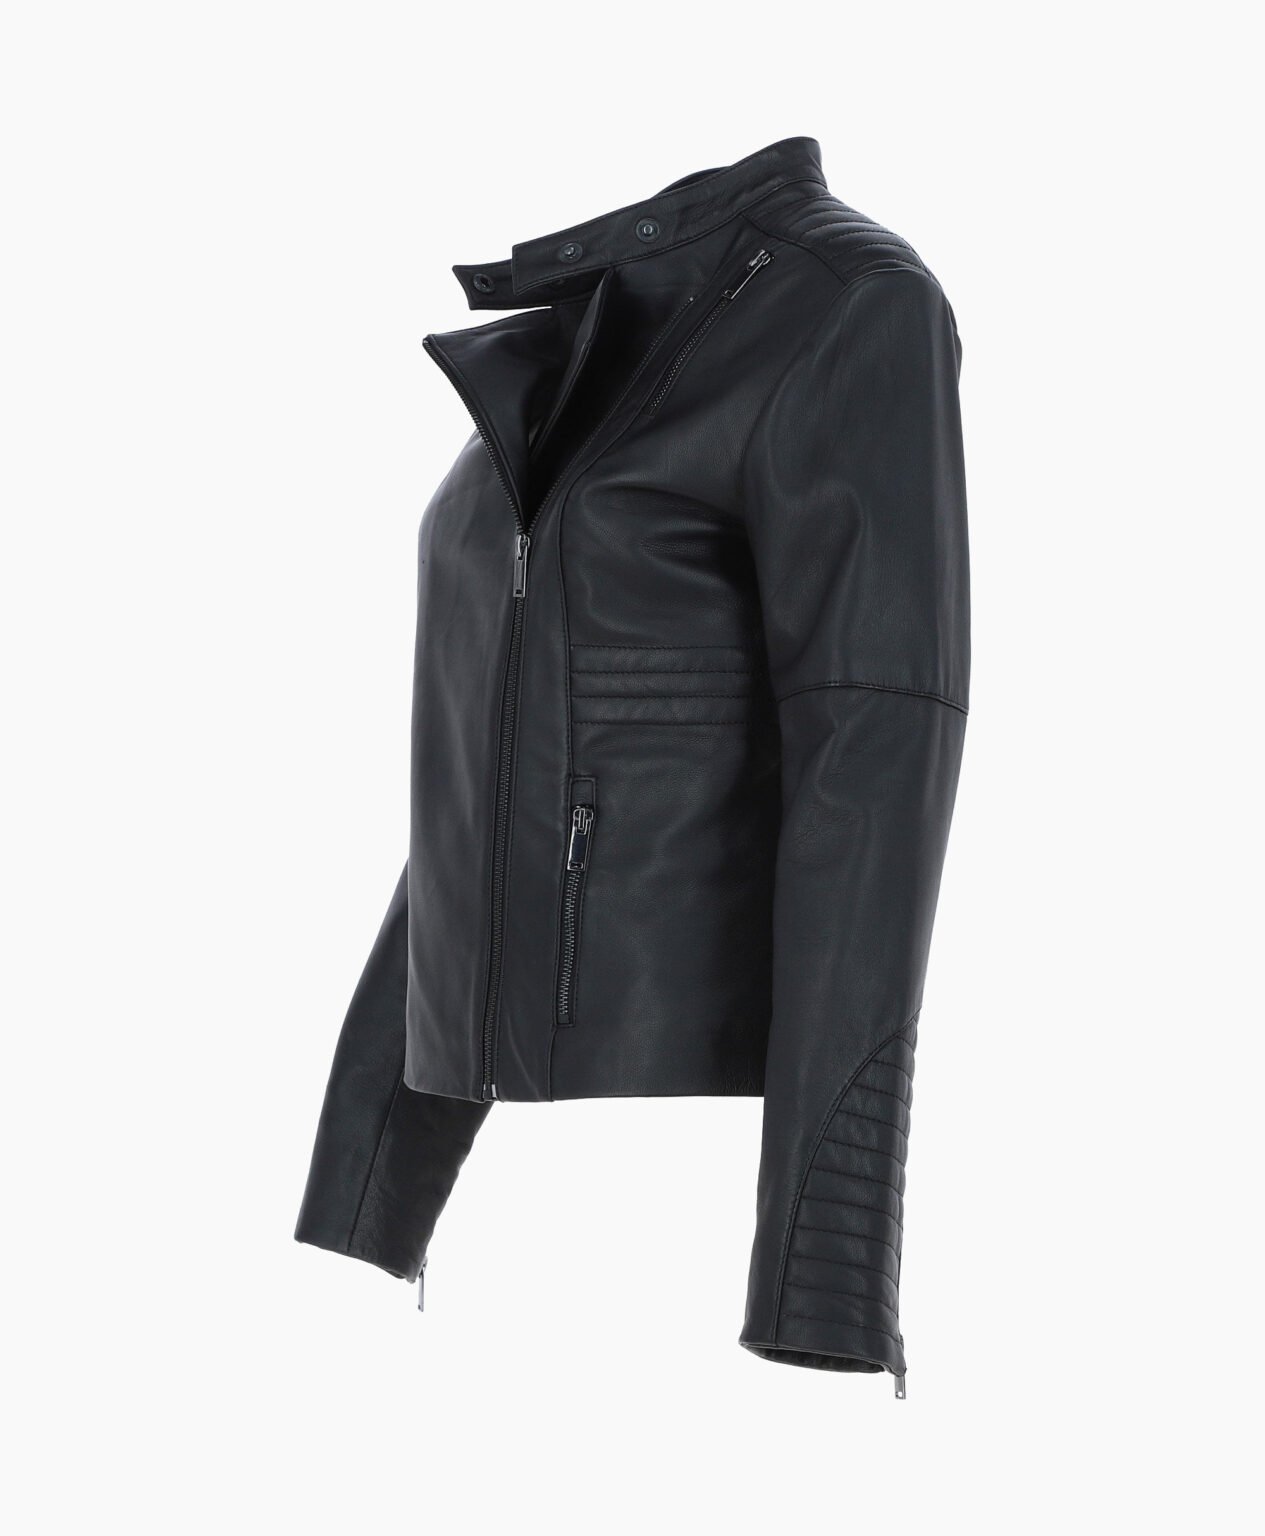 vogue-jacket-leather-biker-jacket-black-urbana-image201